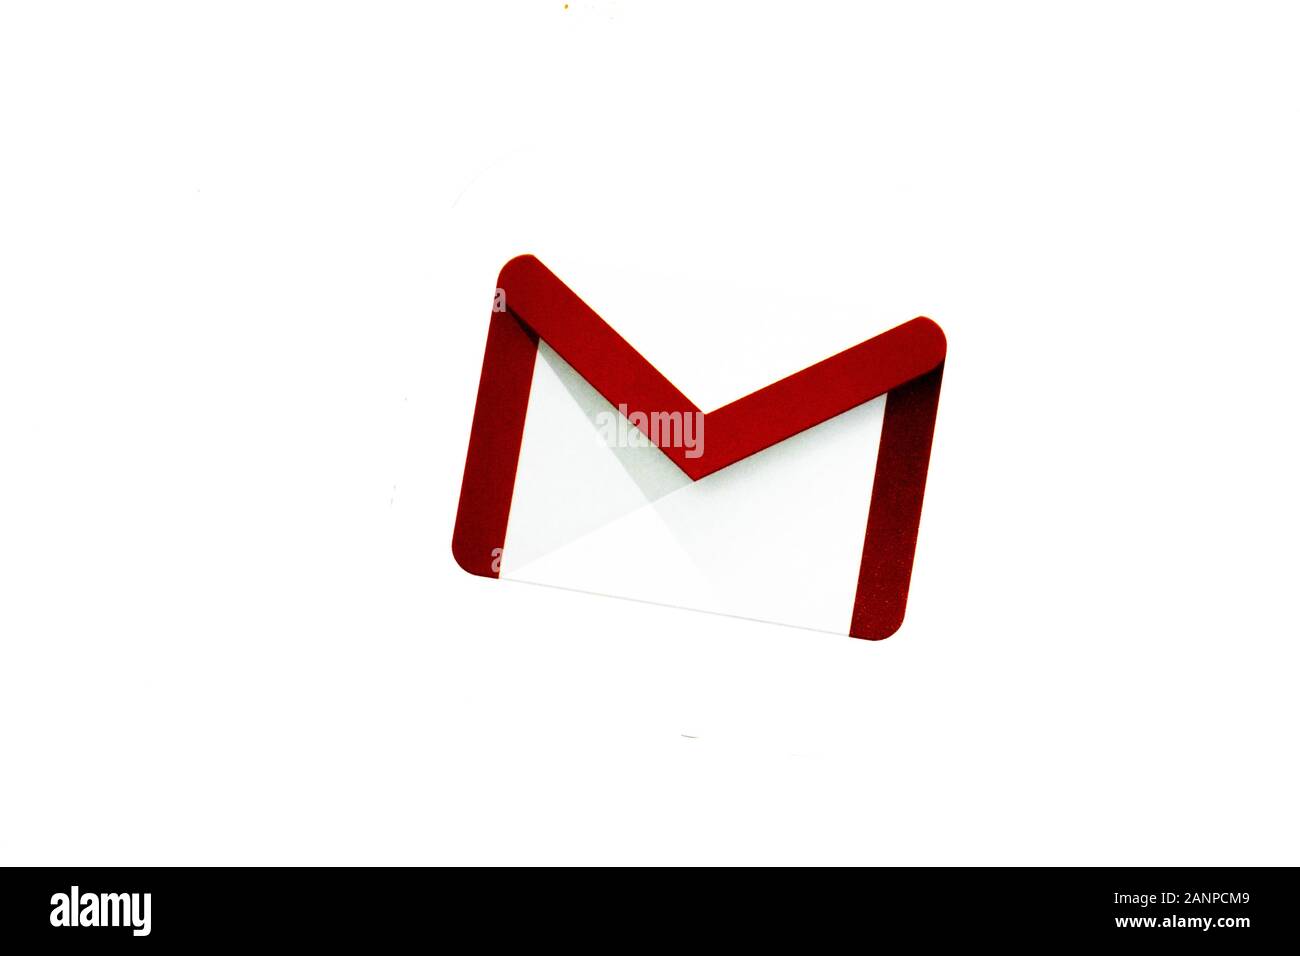 Los Angeles, California, USA - 17 January 2020: Google Gmail icon with copy space, Illustrative Editorial Stock Photo